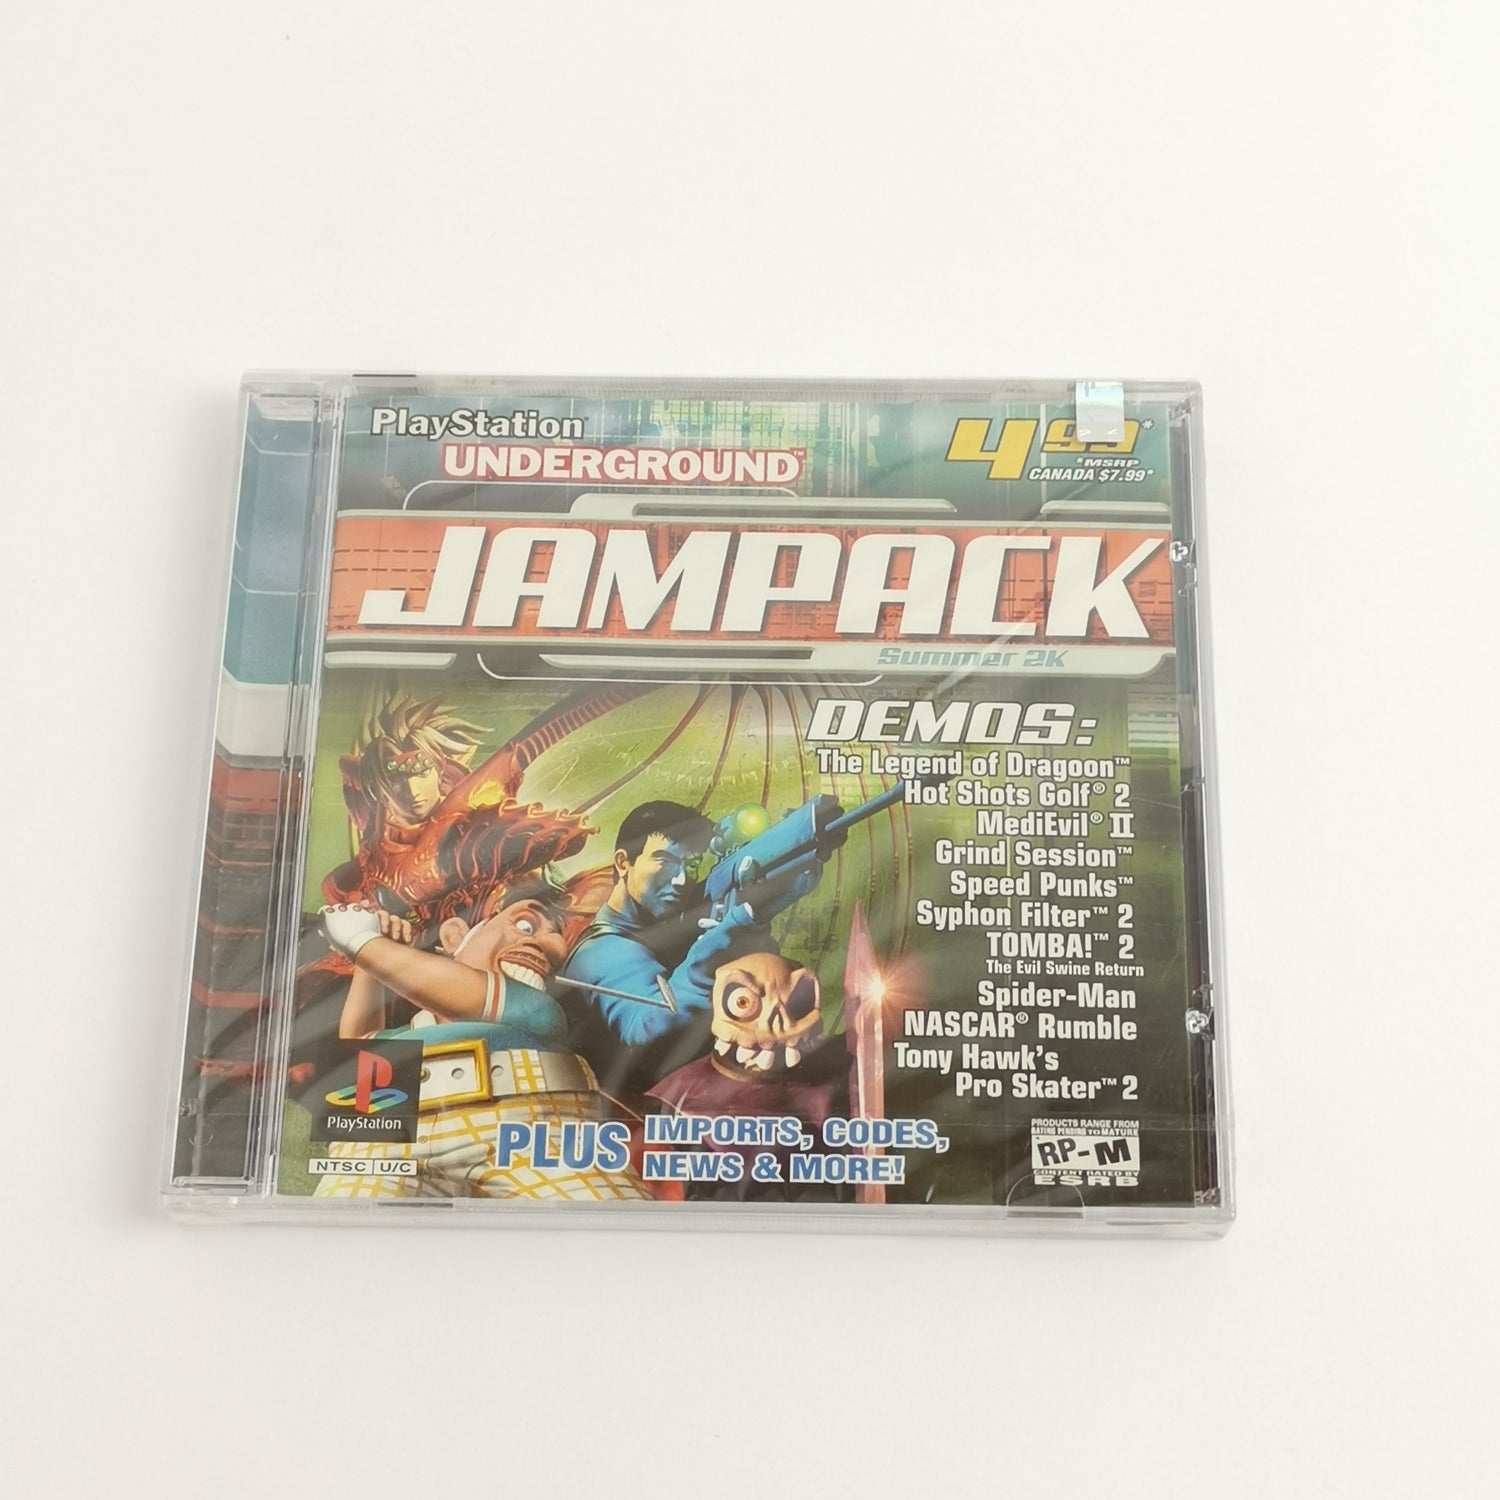 Sony Playstation 1 Underground Demo : Jampack Summer 2K | PS1 USA - NEU NEW [2]